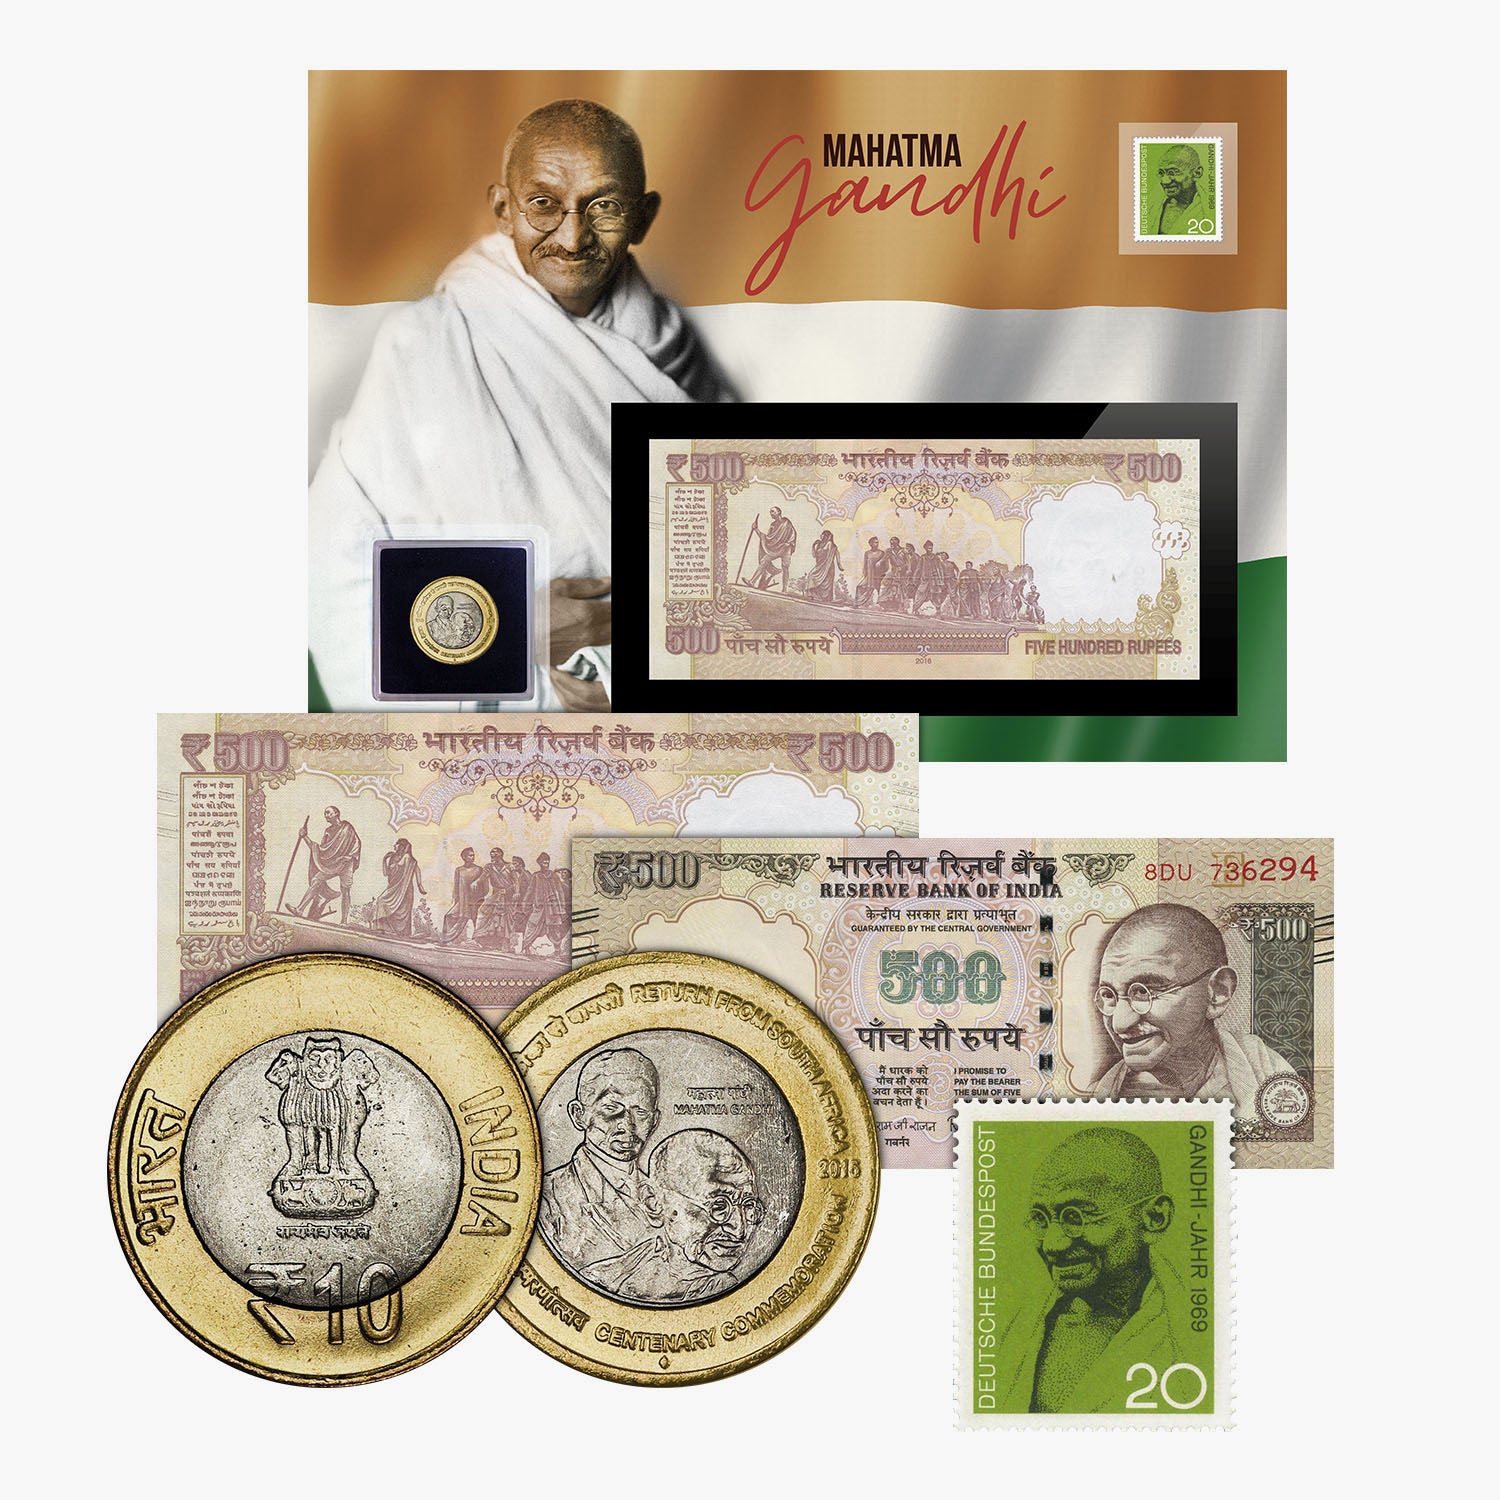 Ensemble de pièces, billets et timbres Mahatma Gandhi